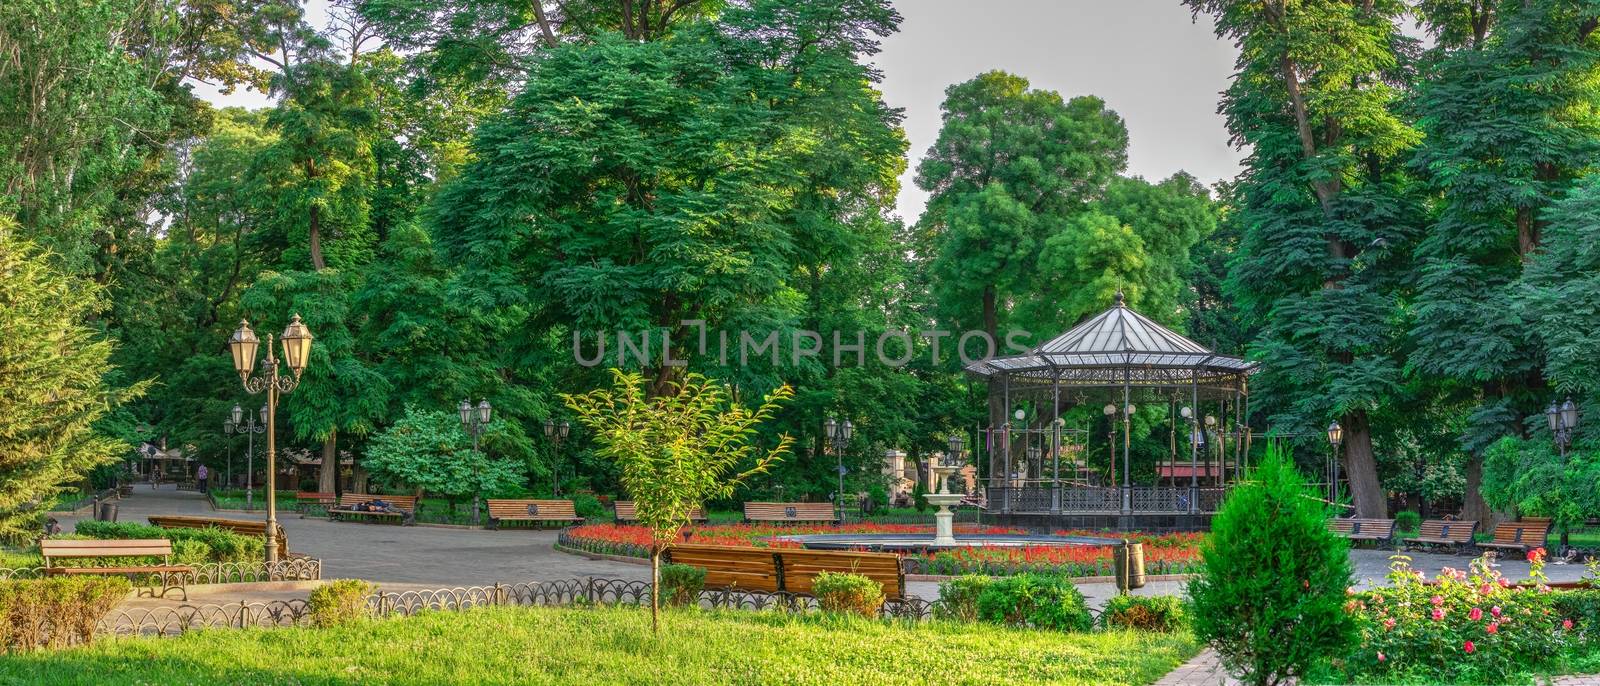 Odessa, Ukraine - 06.16.2019. Summer morning in the City garden, the historic center of Odessa, Ukraine